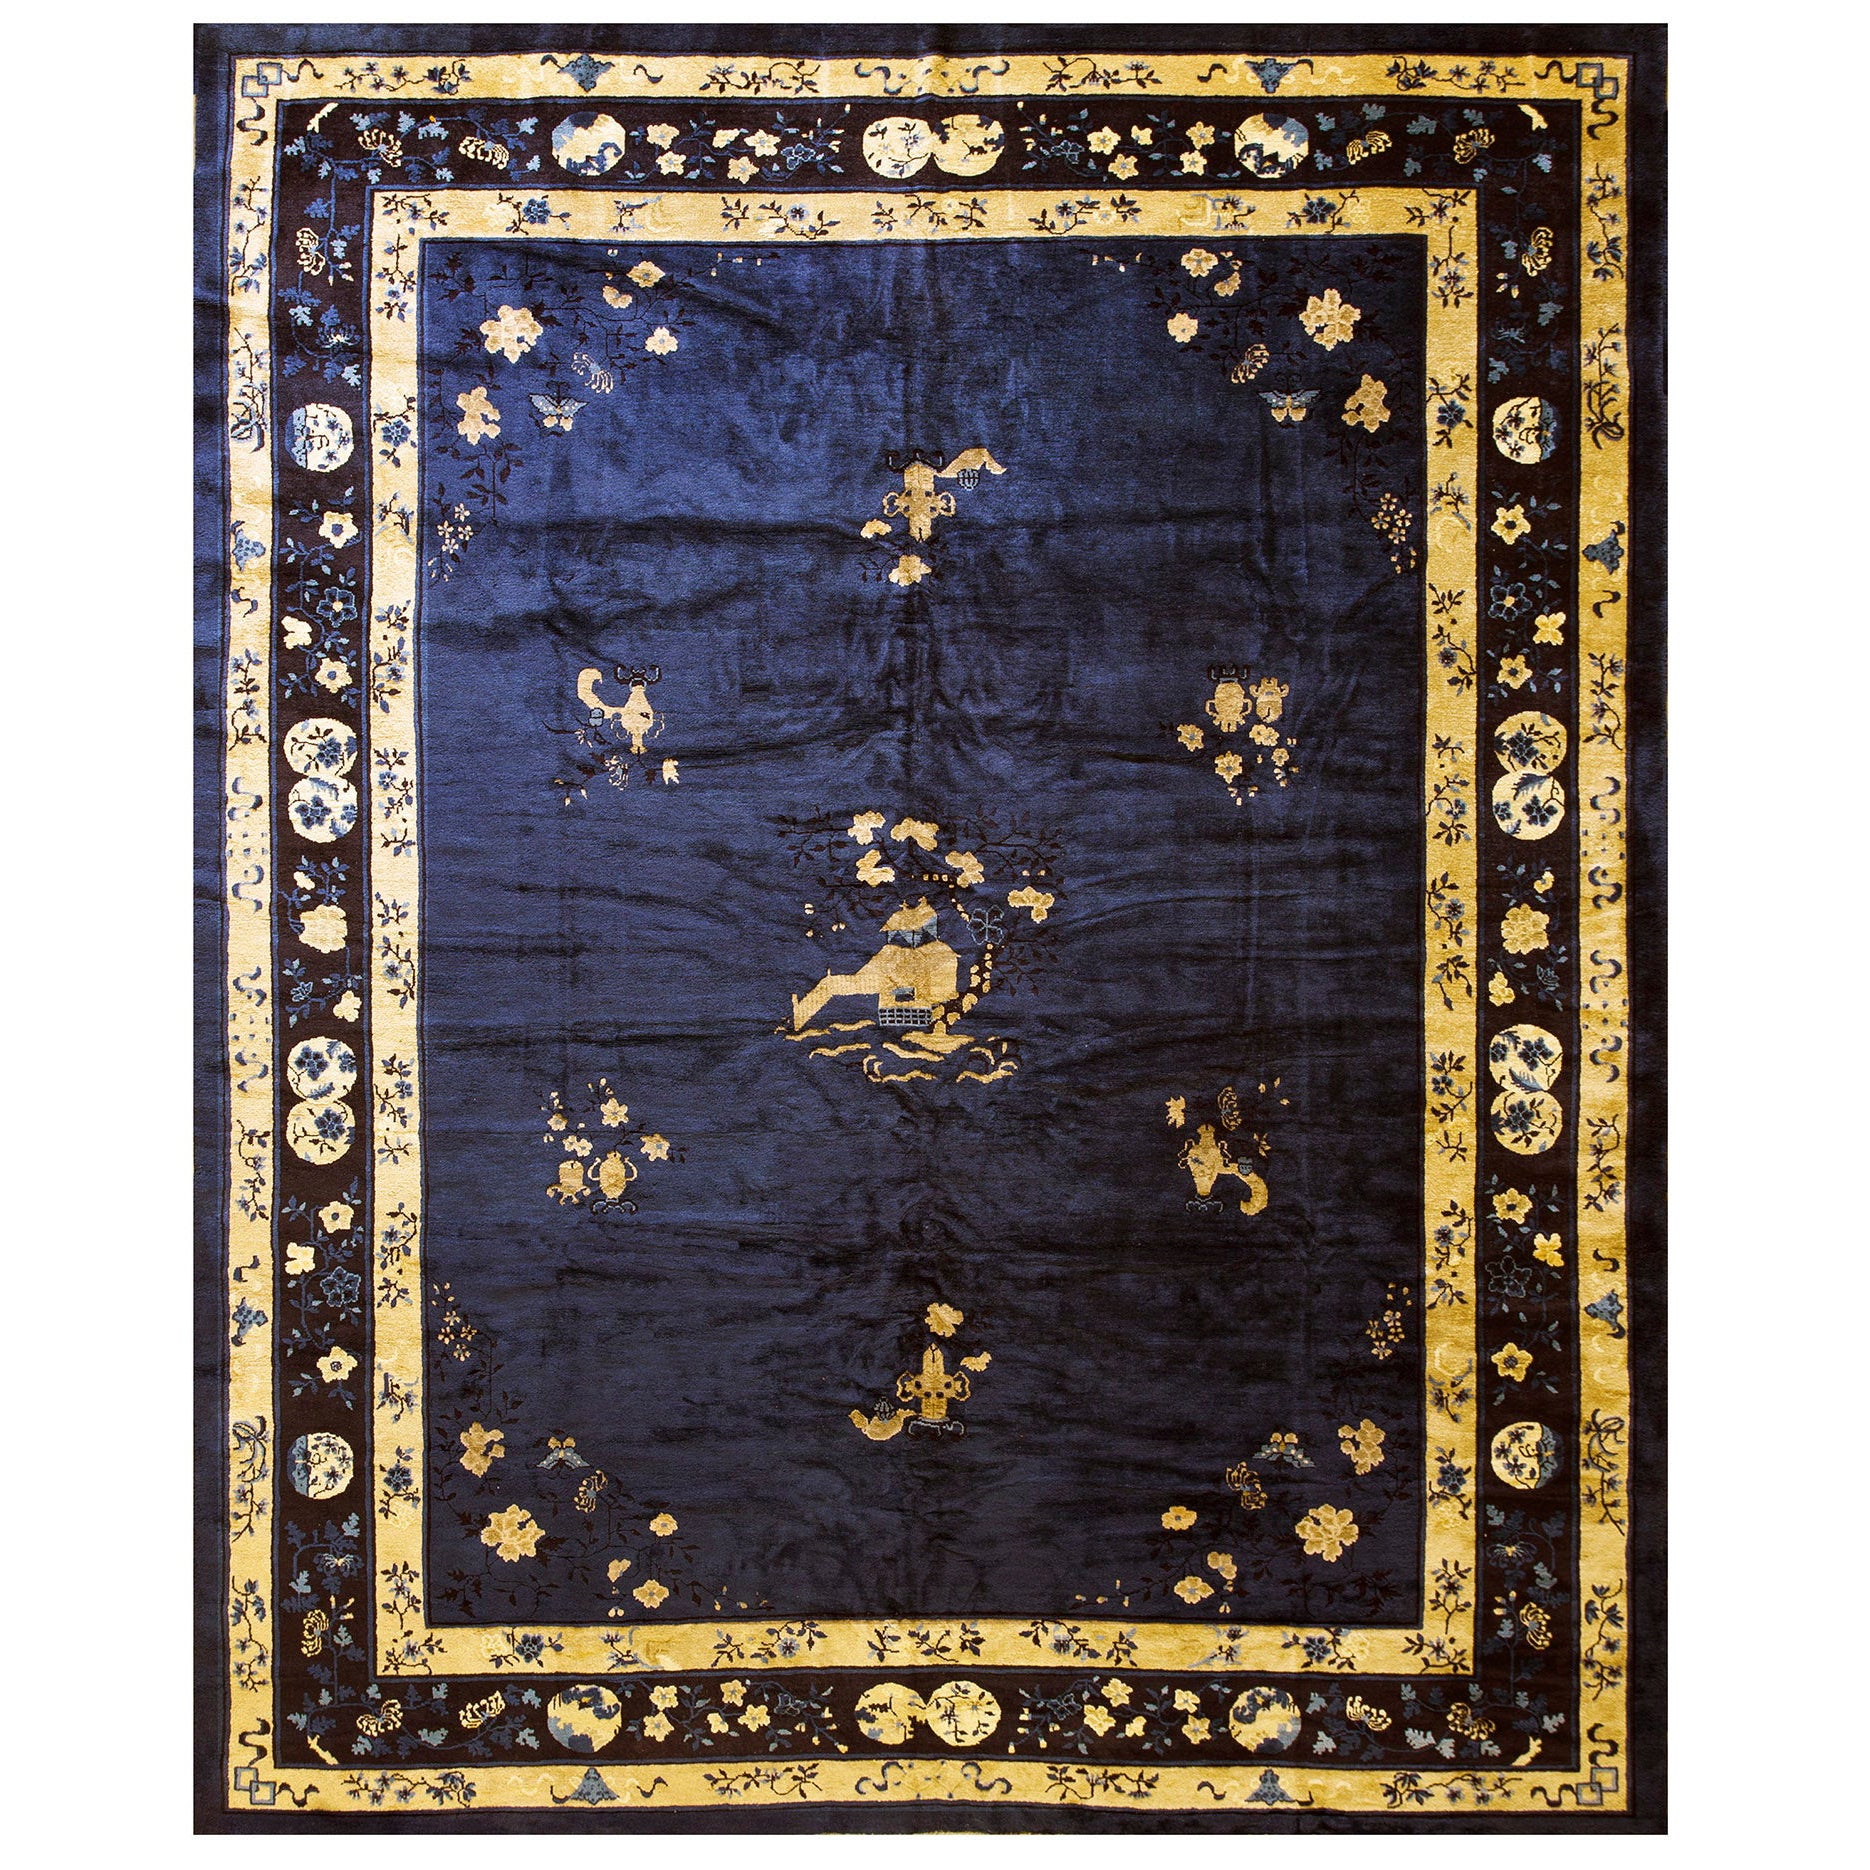 Early 20th Century Chinese Peking Carpet ( 10'2'' x 12'6'' - 310 x 380 )